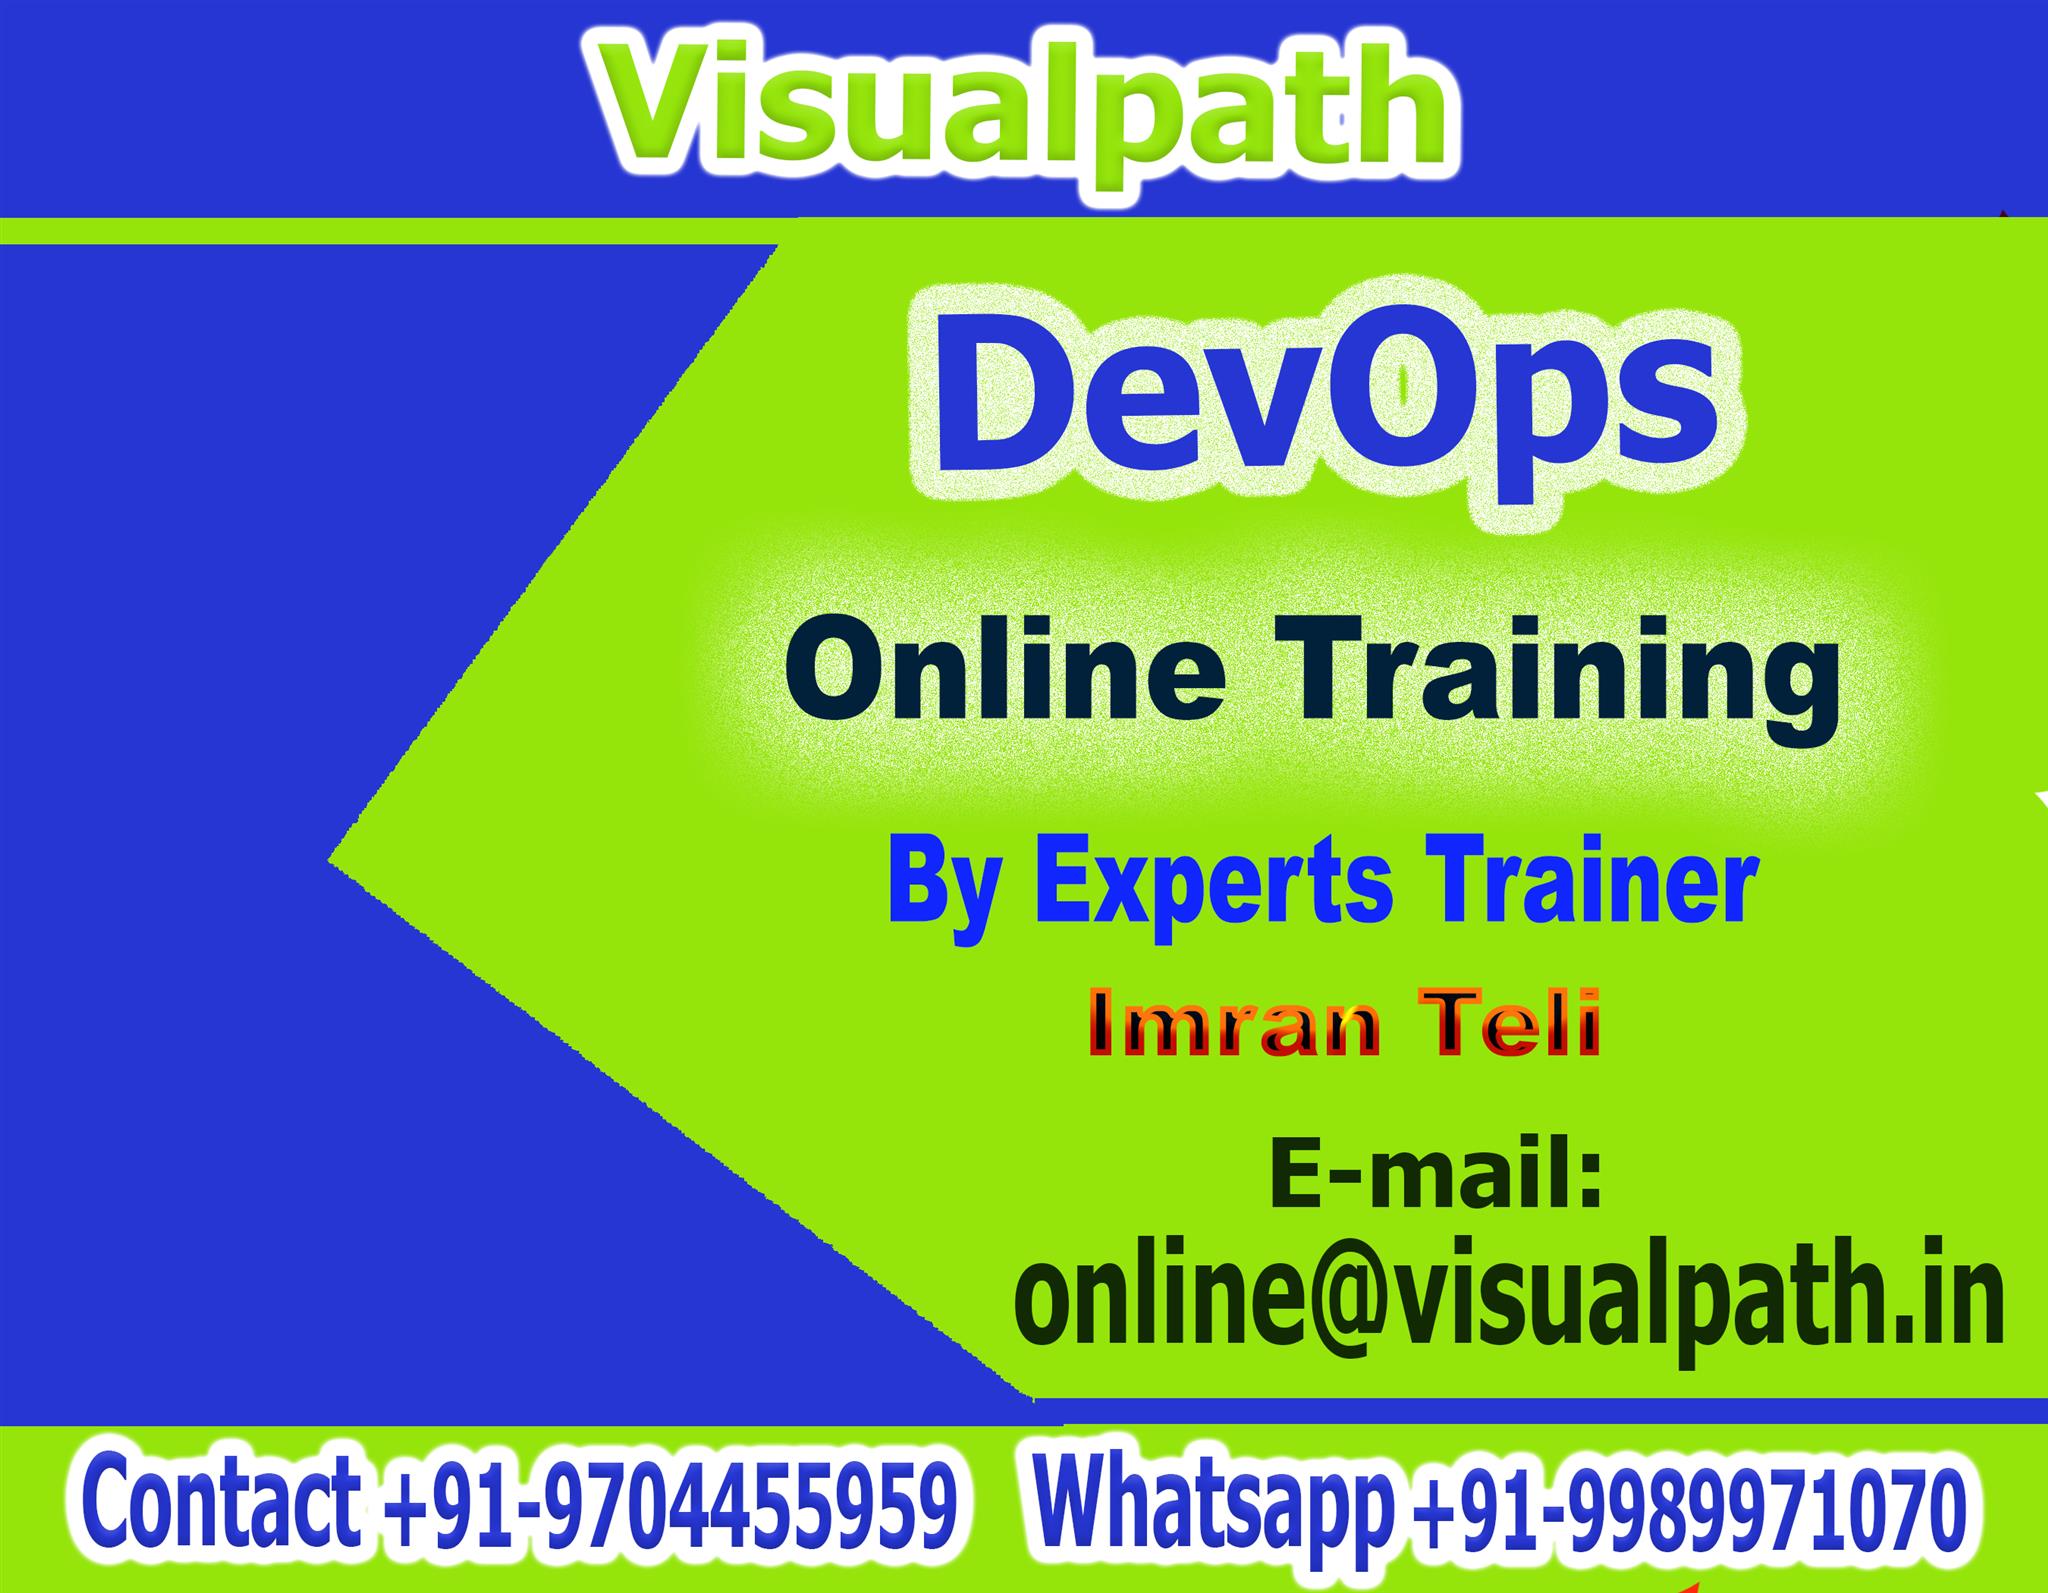 DevOps Training in Hyderabad, Hyderabad, Andhra Pradesh, India